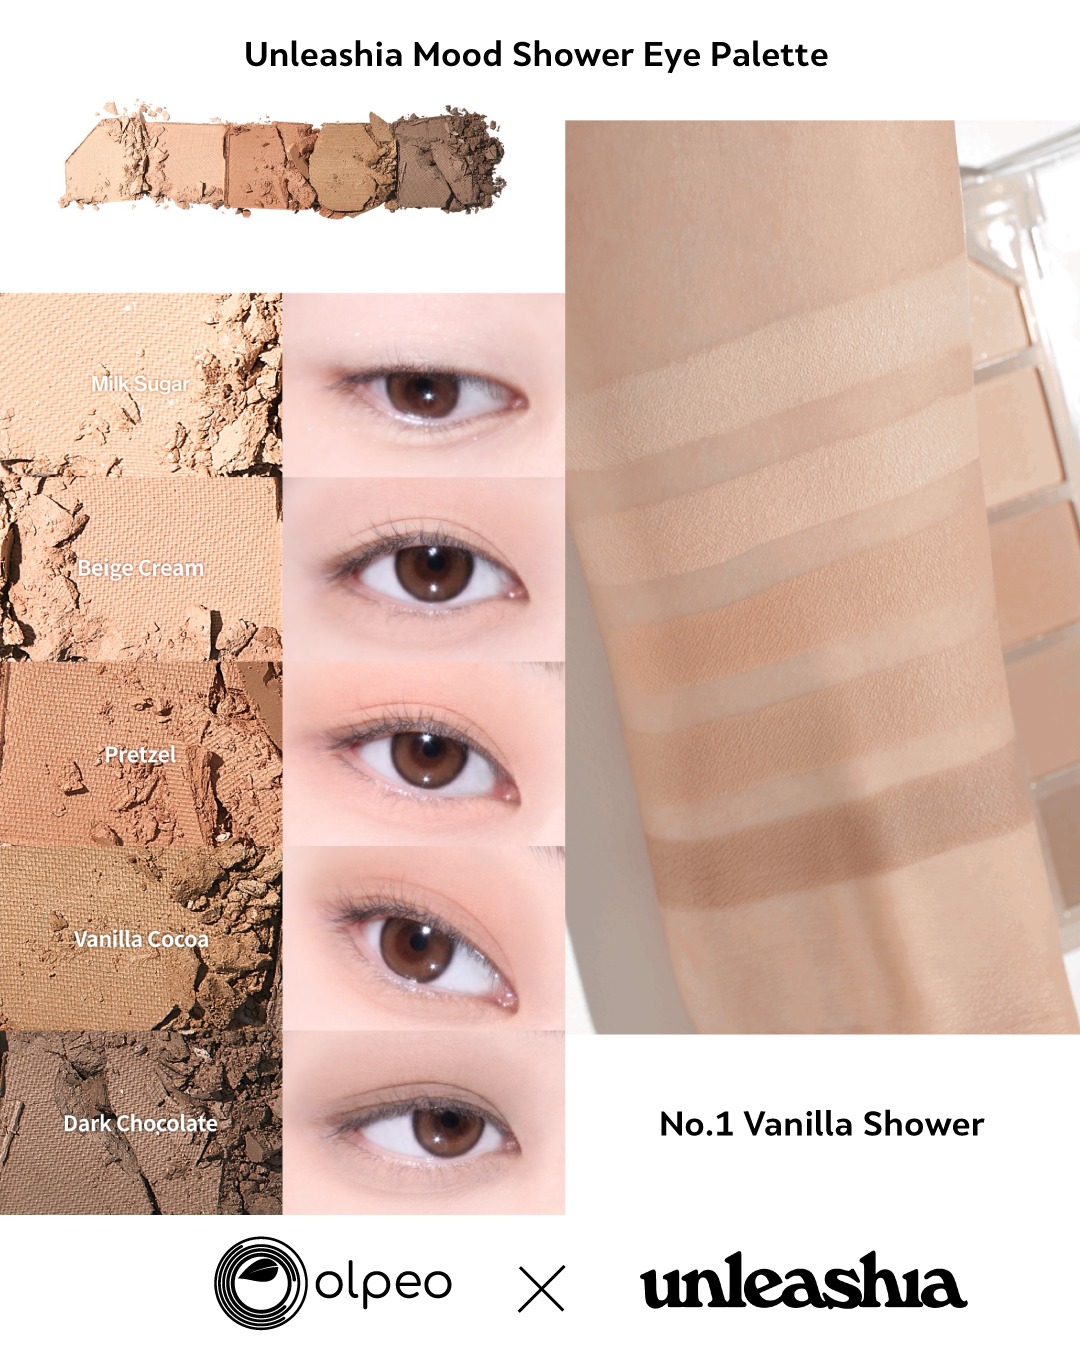 Mood Shower Eye Palette #1 Vanilla Shower [Unleashia]